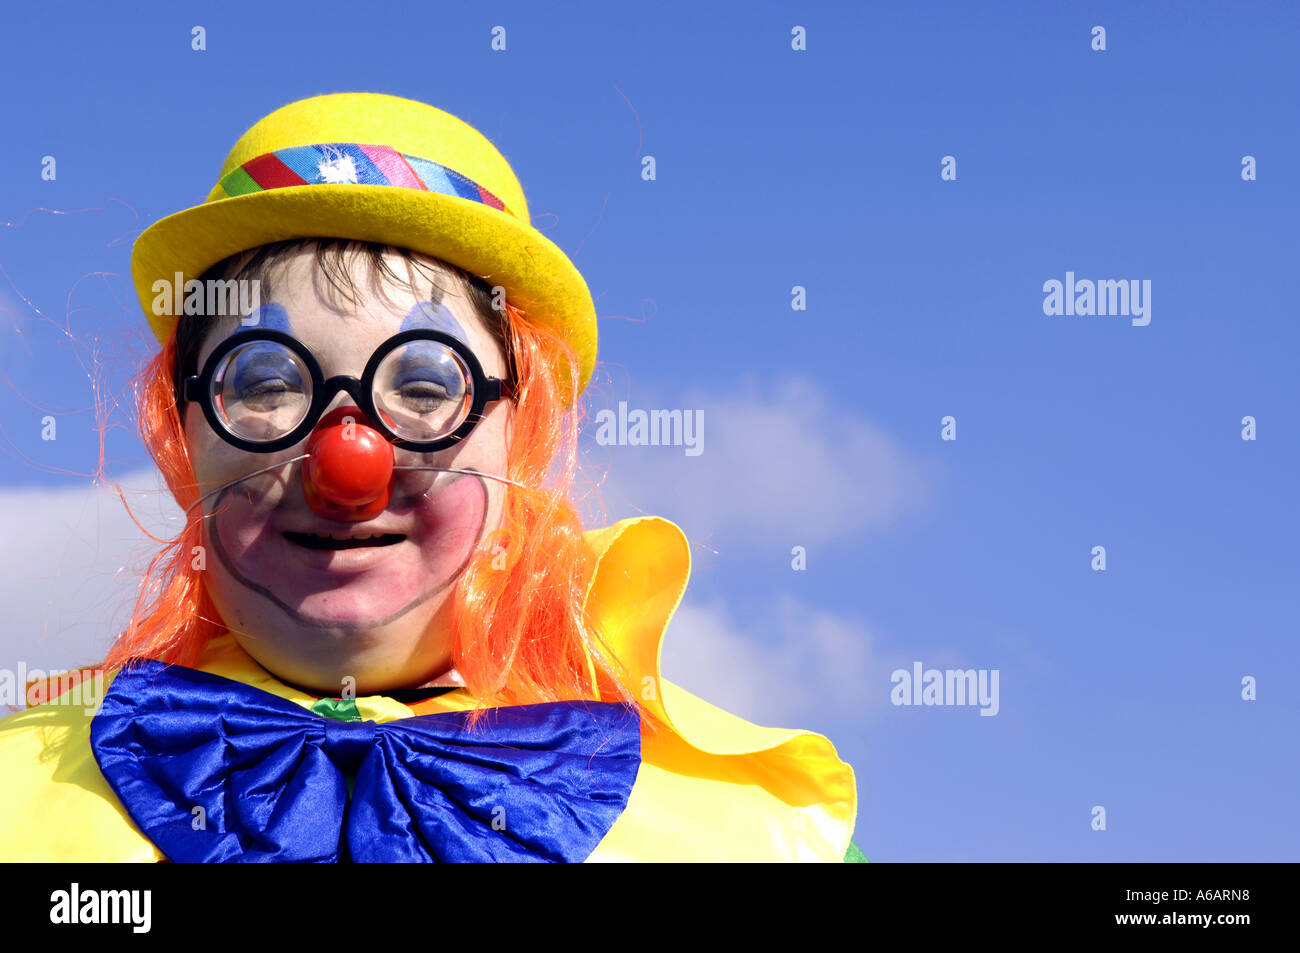 Le Carnaval Carnaval Clown Kid Boy Hommes Jeunes Garçon